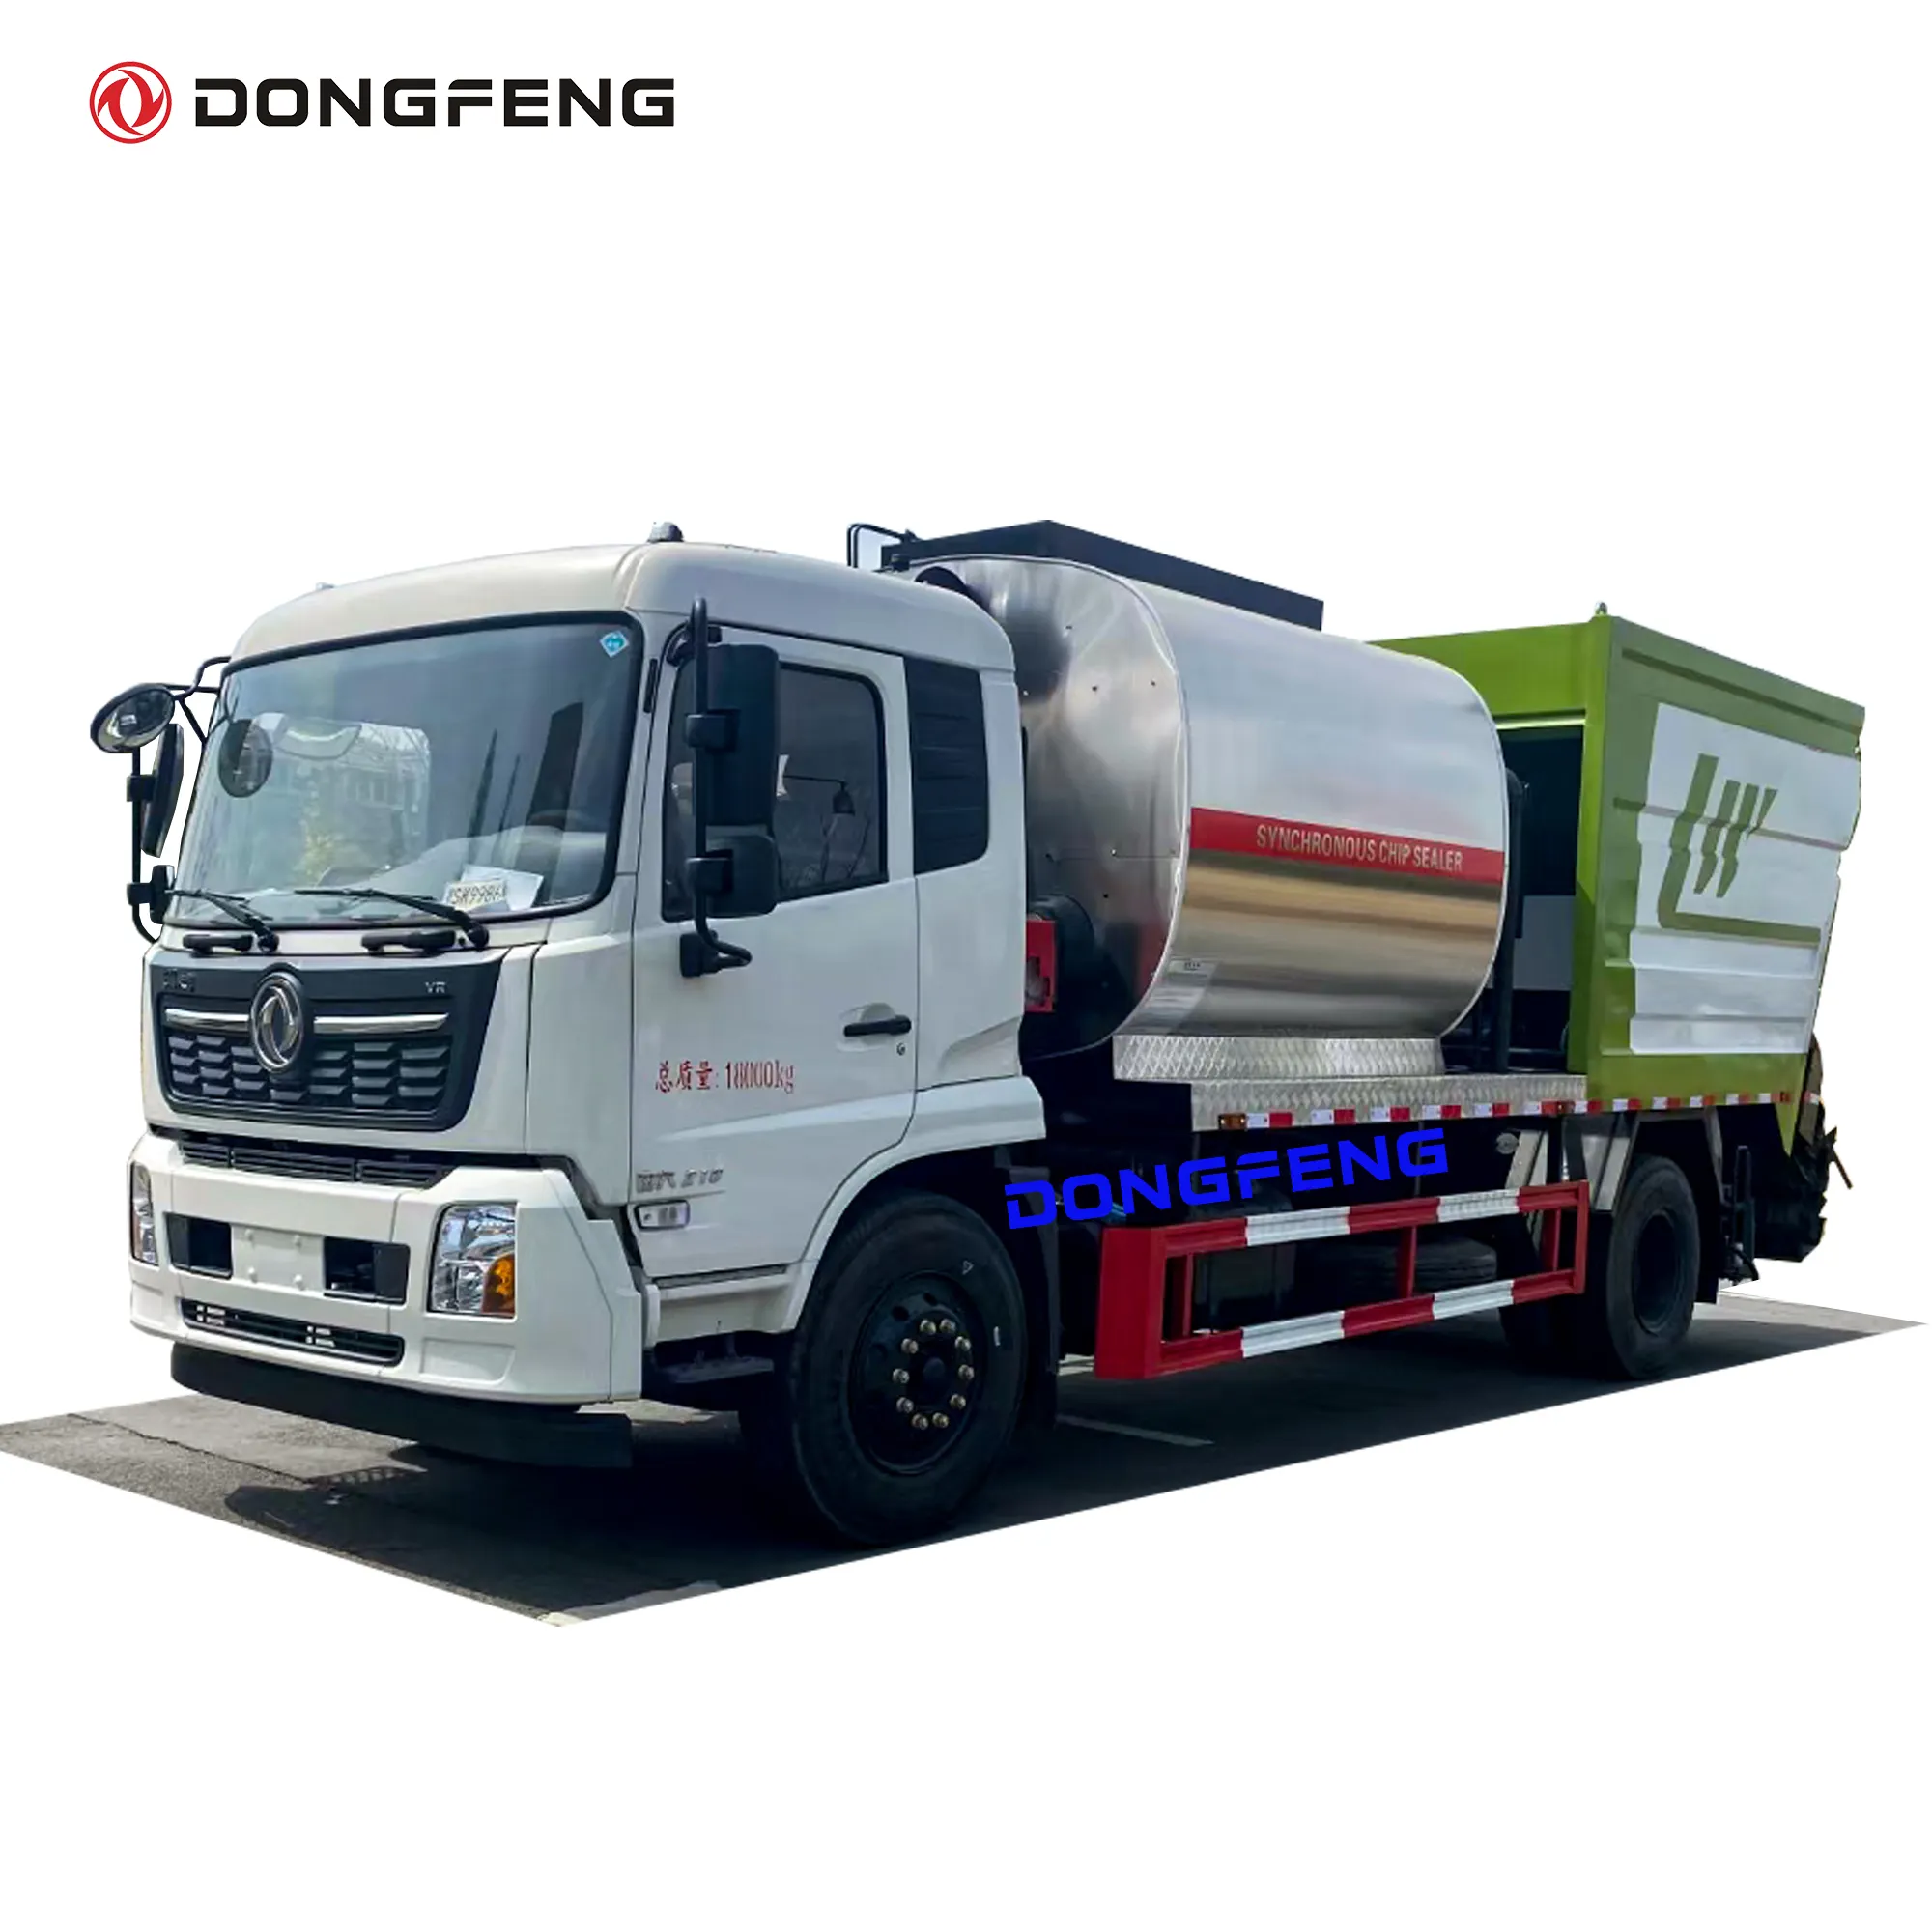 Dongfeng senkron sızdırmazlık kamyon 4x2 tipi 6 m3 bitüm 8 m3 ezilme taş tankı tasarımı yol kaldırım çalışma